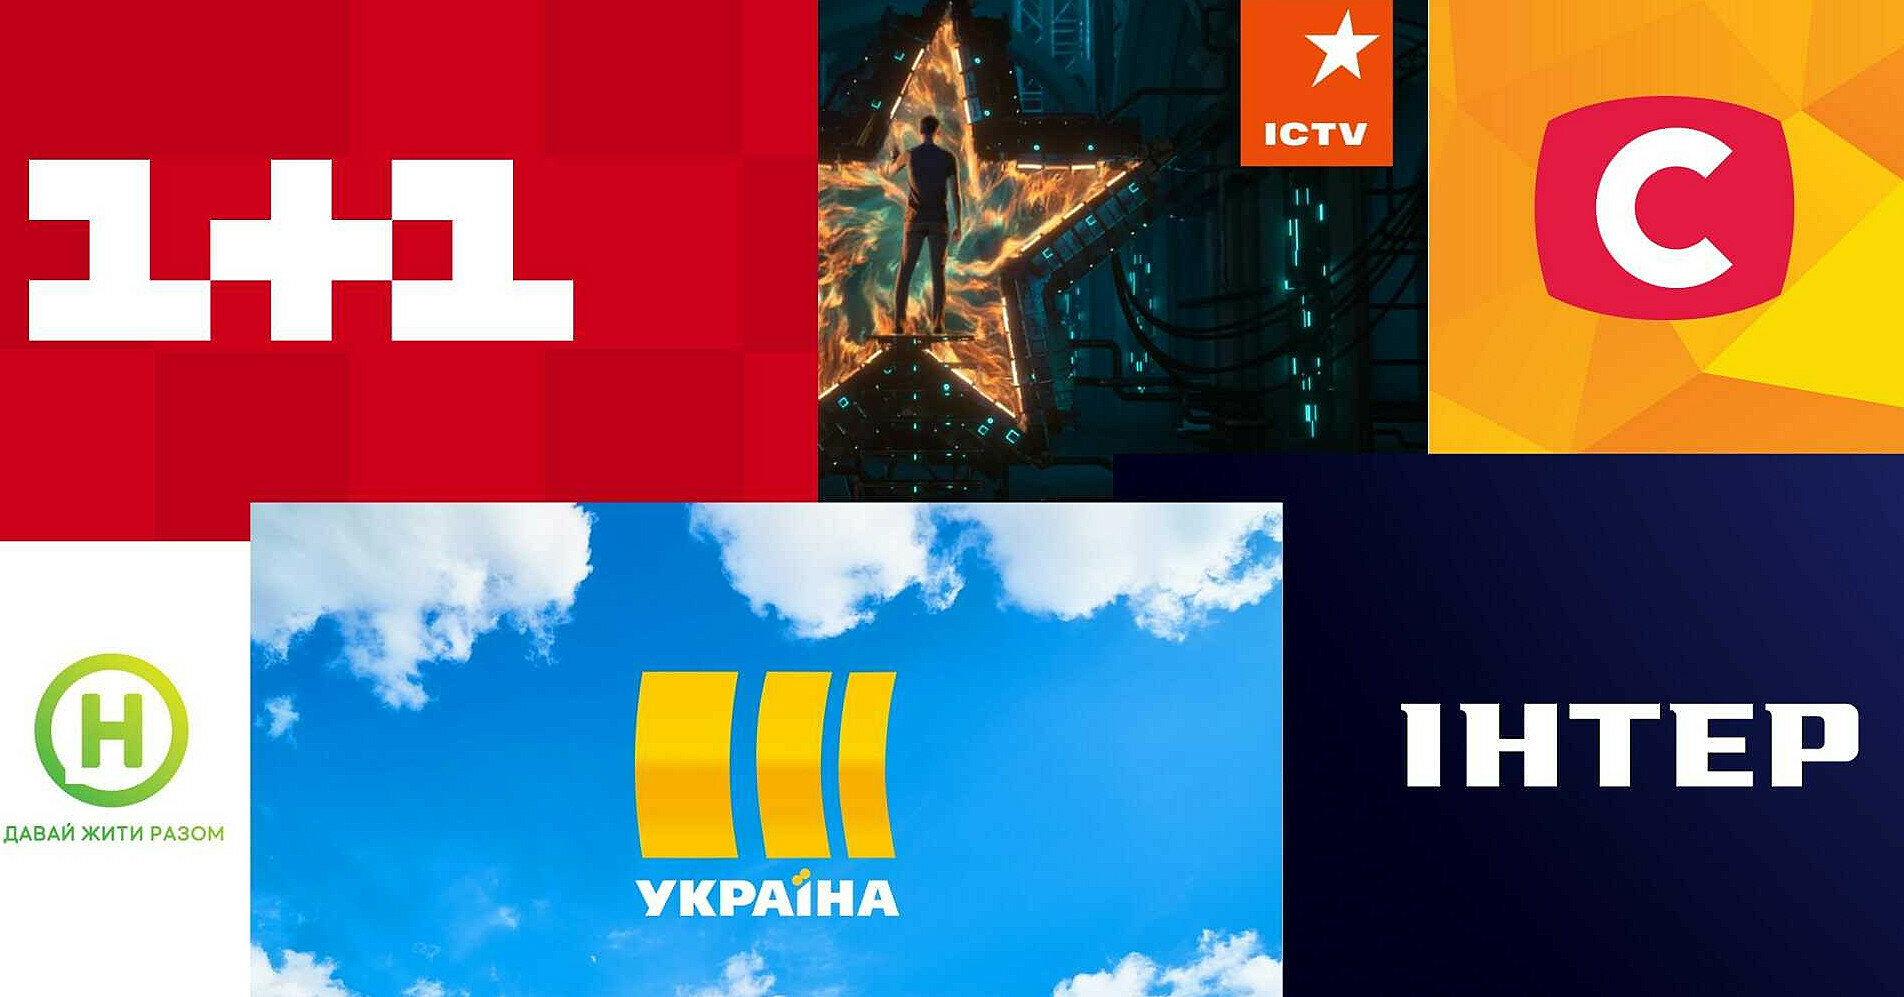 Нацрада ініціює перевірку українських телеканалів